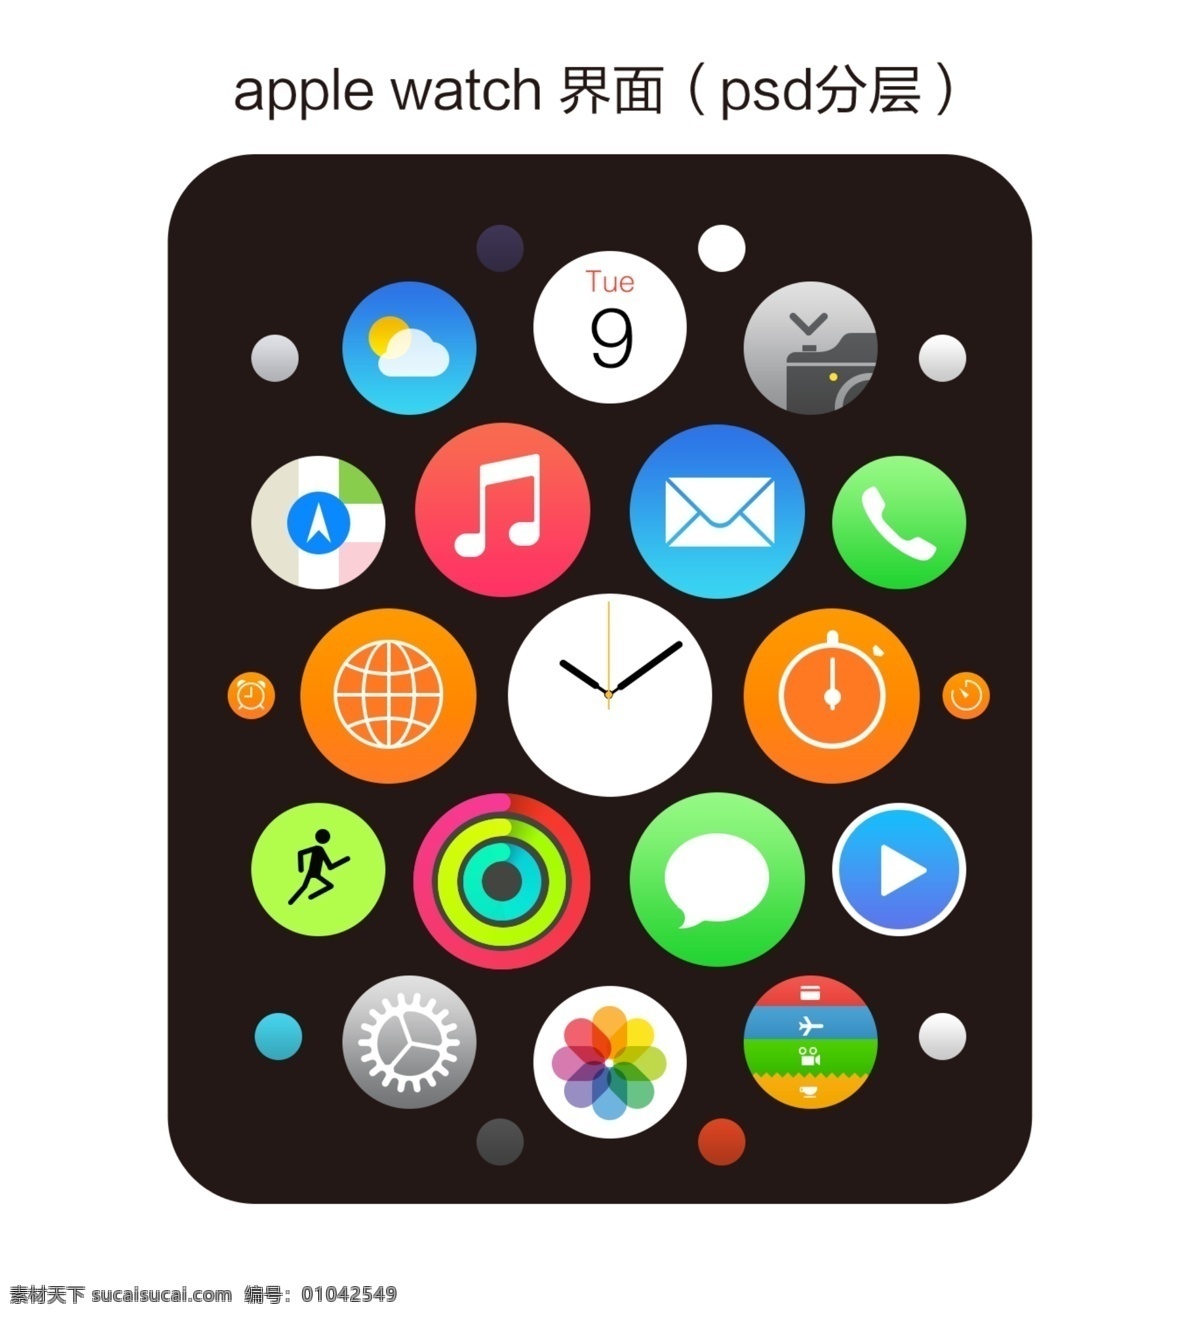 apple watch 界面 iwatch 苹果手表界面 苹果手表 手表界面设计 智能手表 摄影图片 web 界面设计 图标按钮